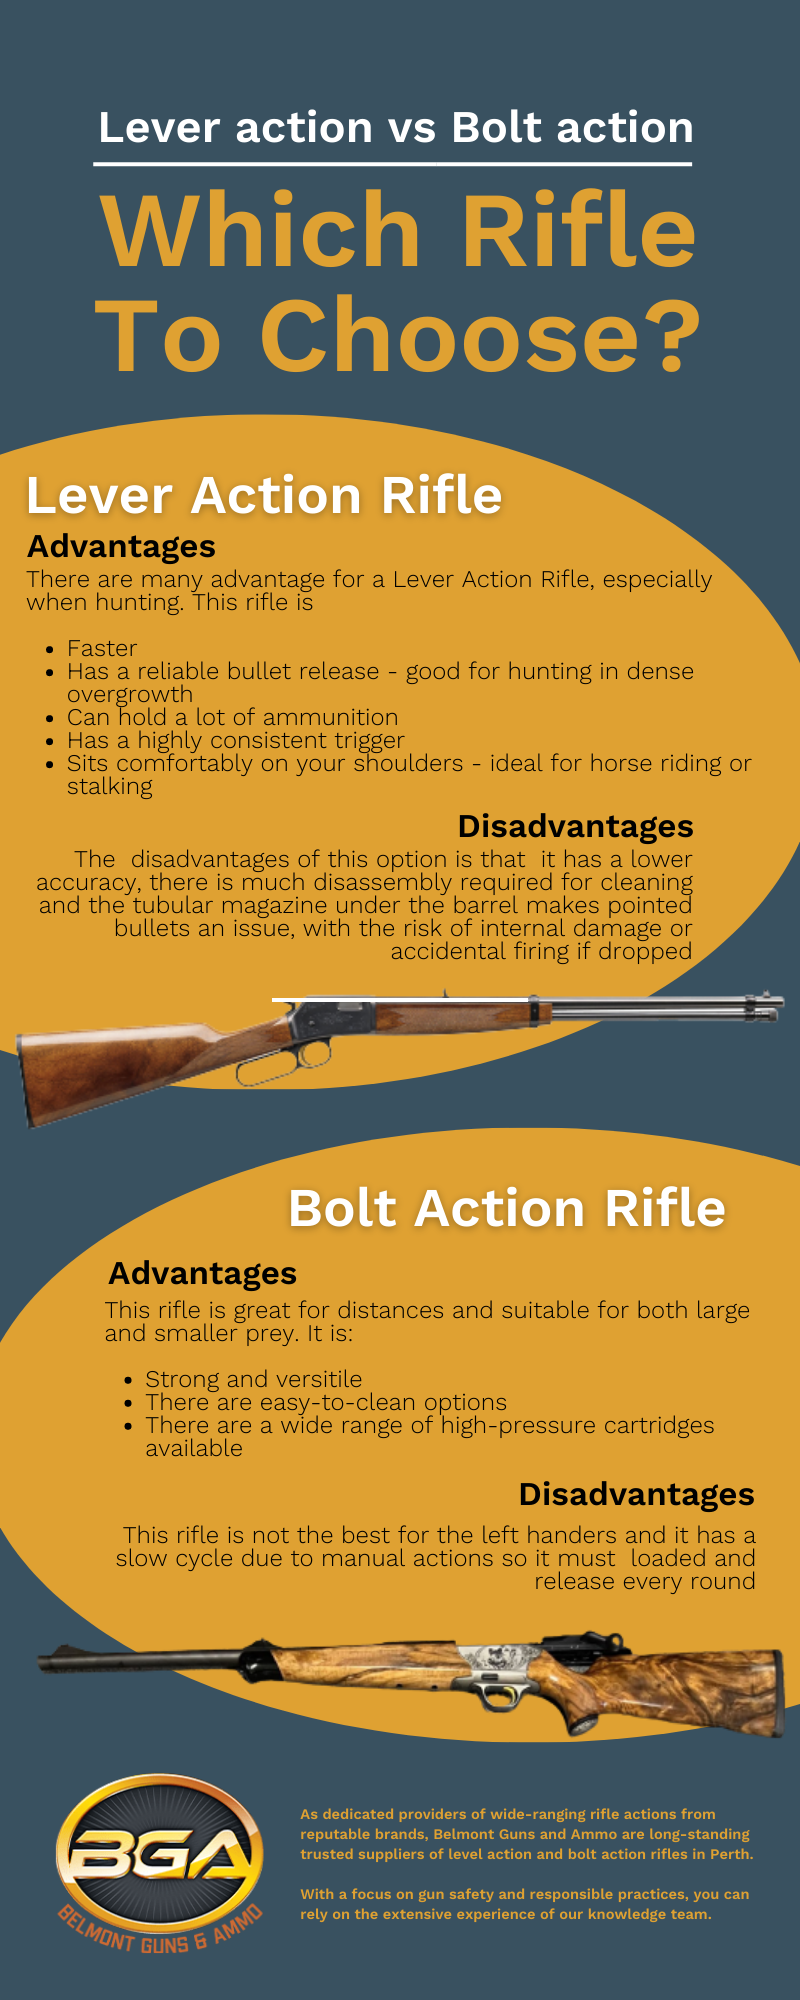 bolt action vs lever action rifle